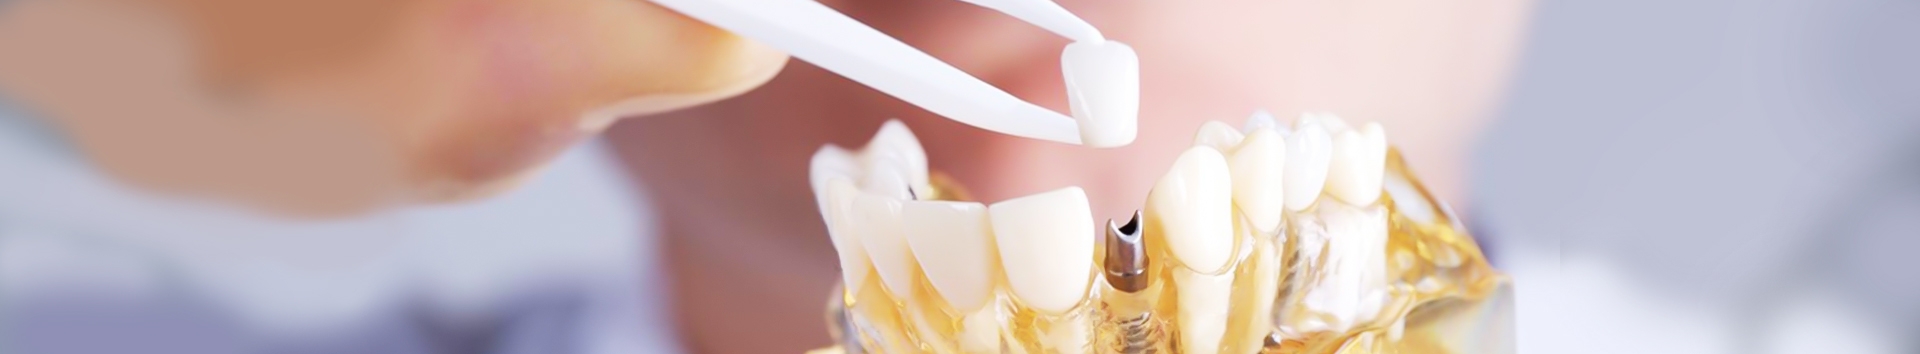 Implante dentário na clínica odontológica errada causa mau hálito